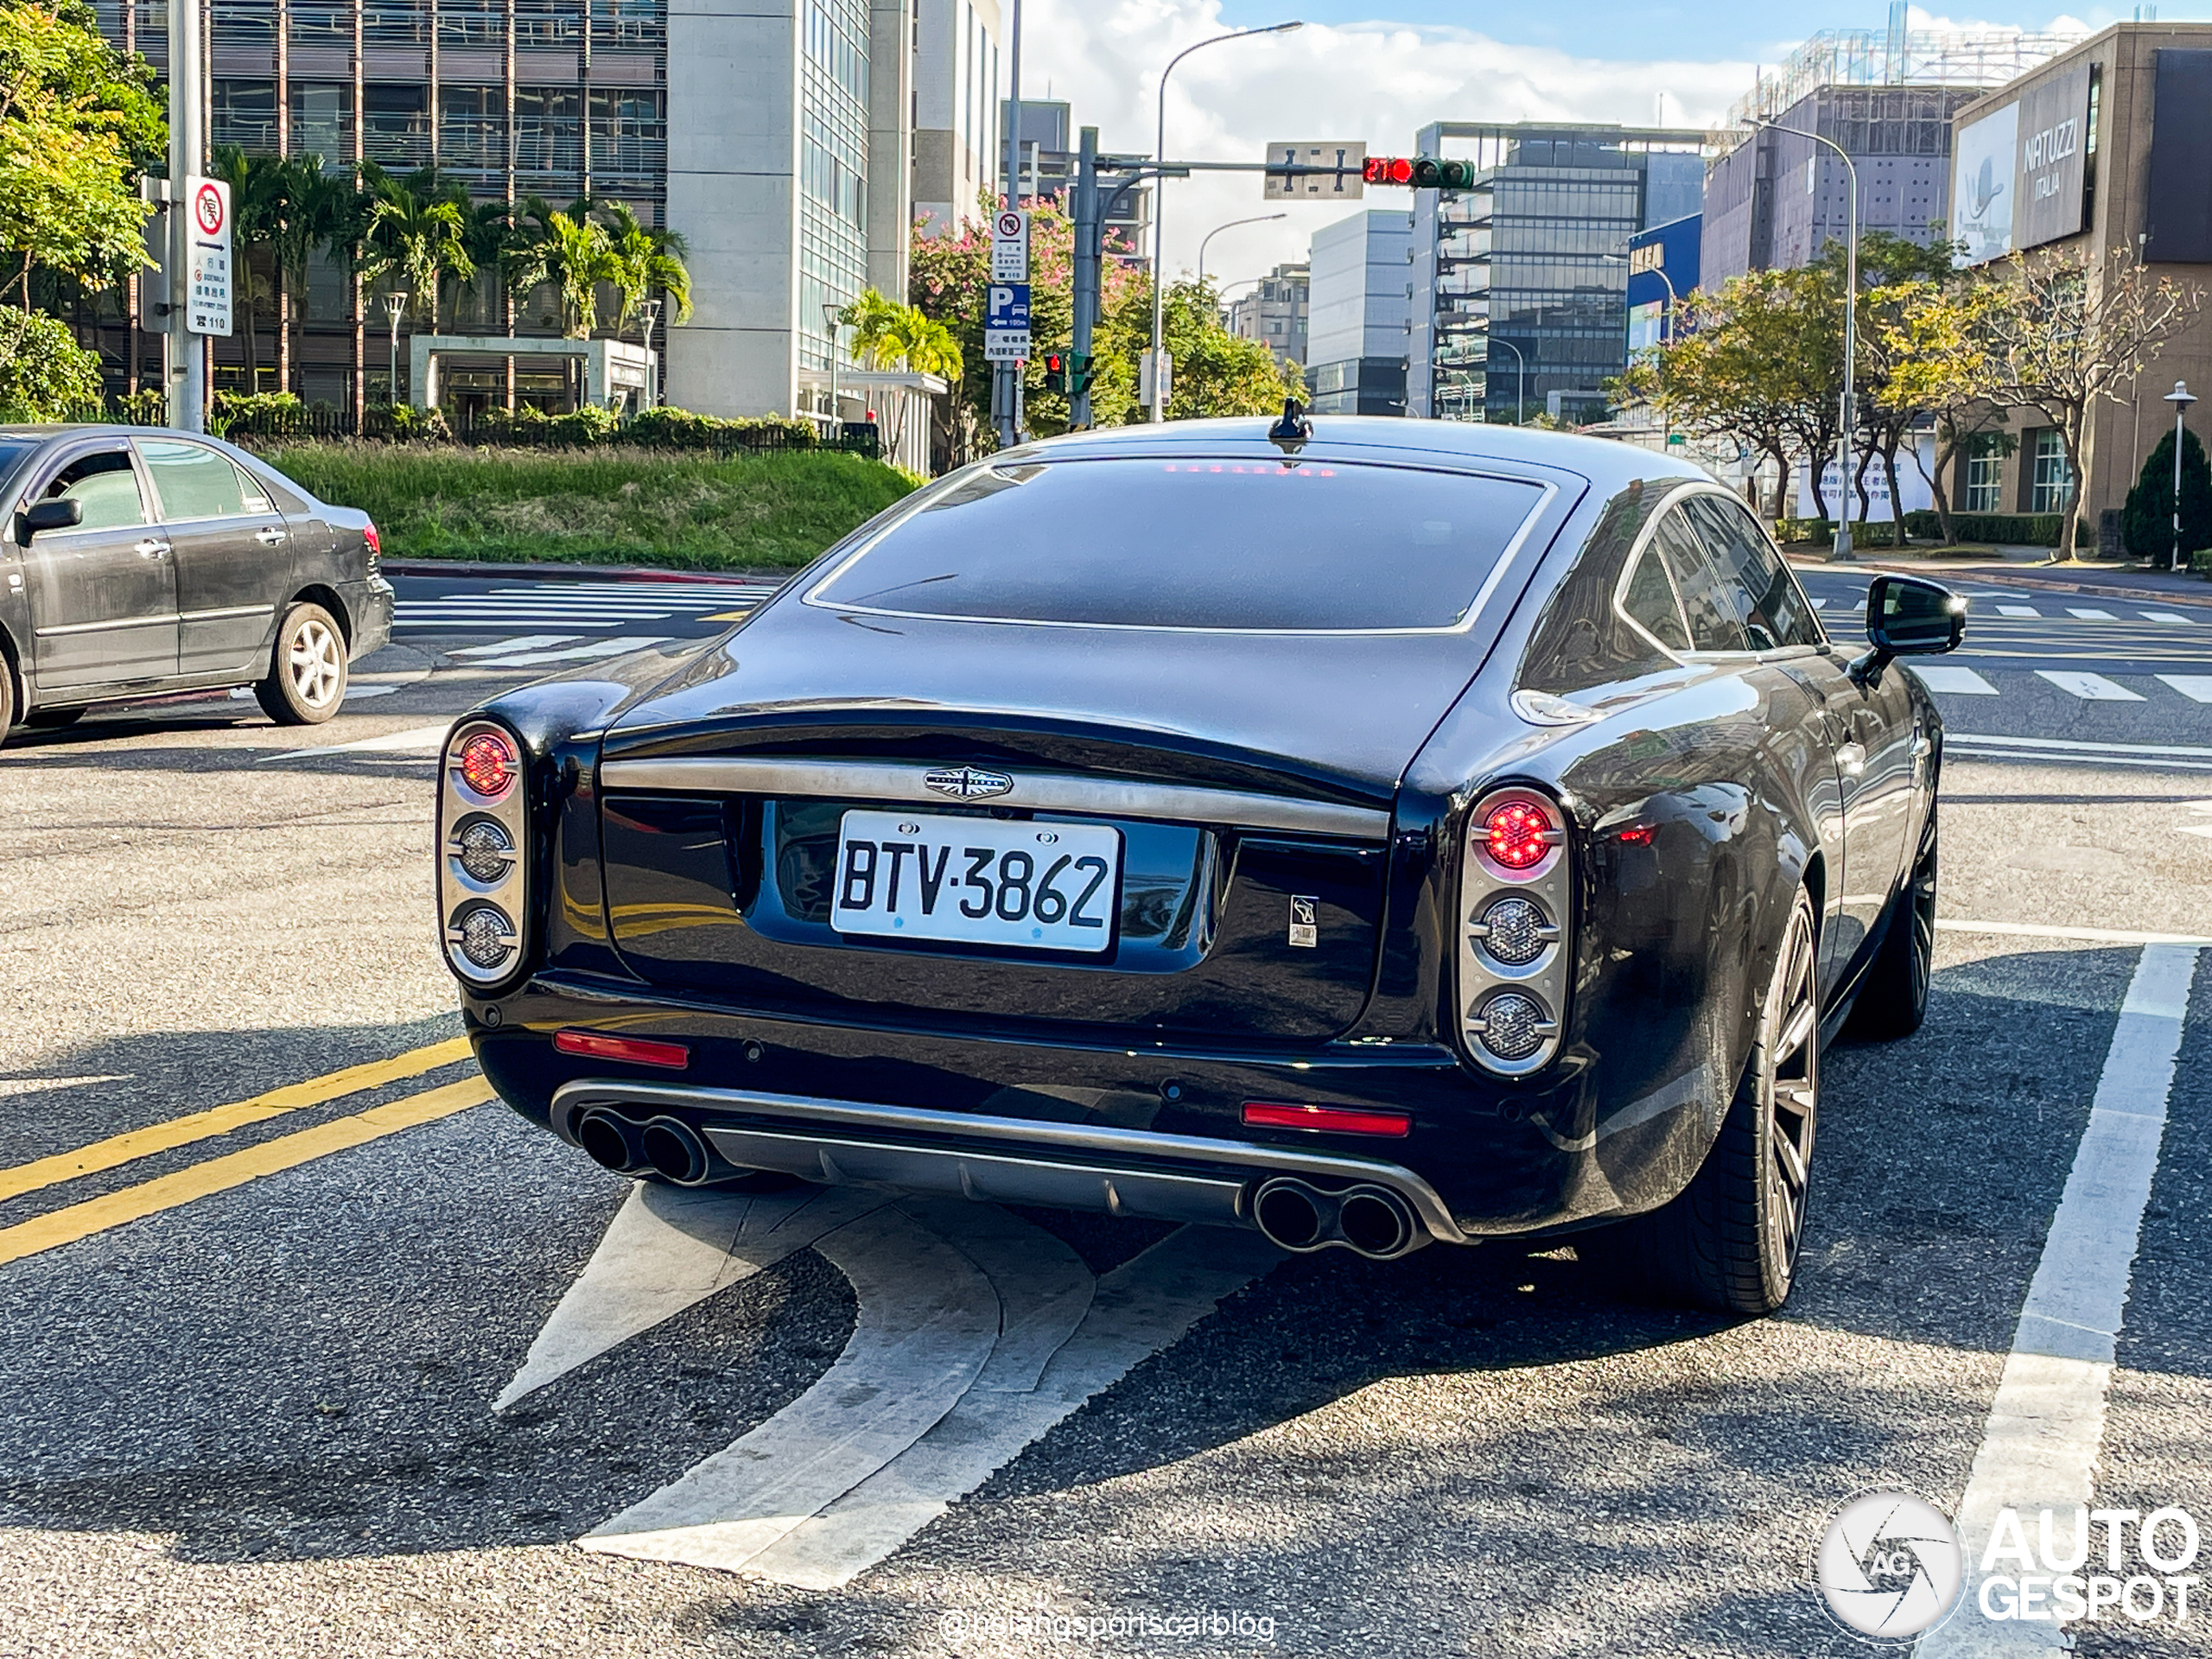 A David Brown Speedback GT shows up in Taipei